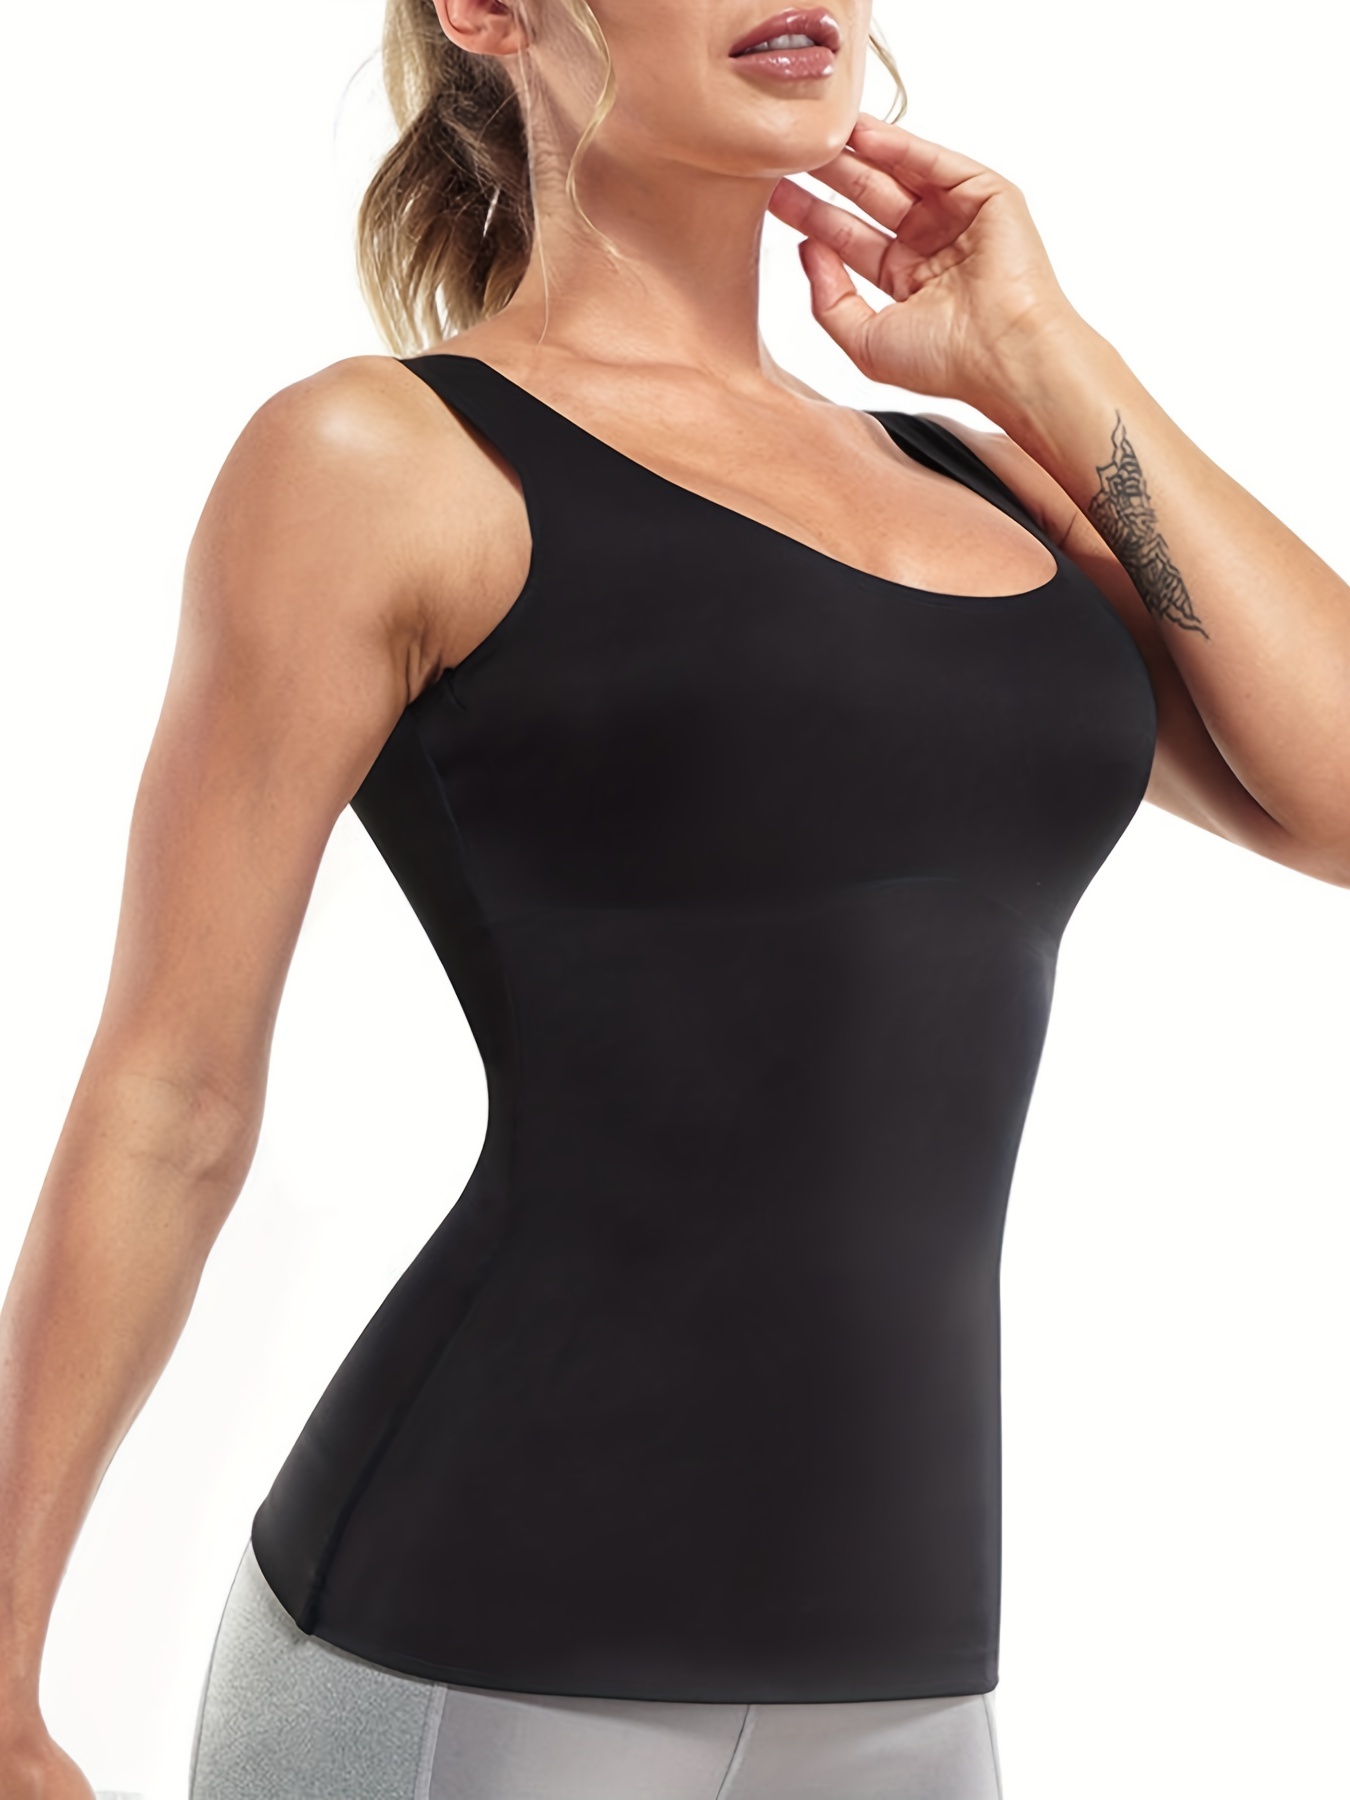 Fi Body Shaper Plus Size Bra Cami Tank Top Slimming Vest Corset